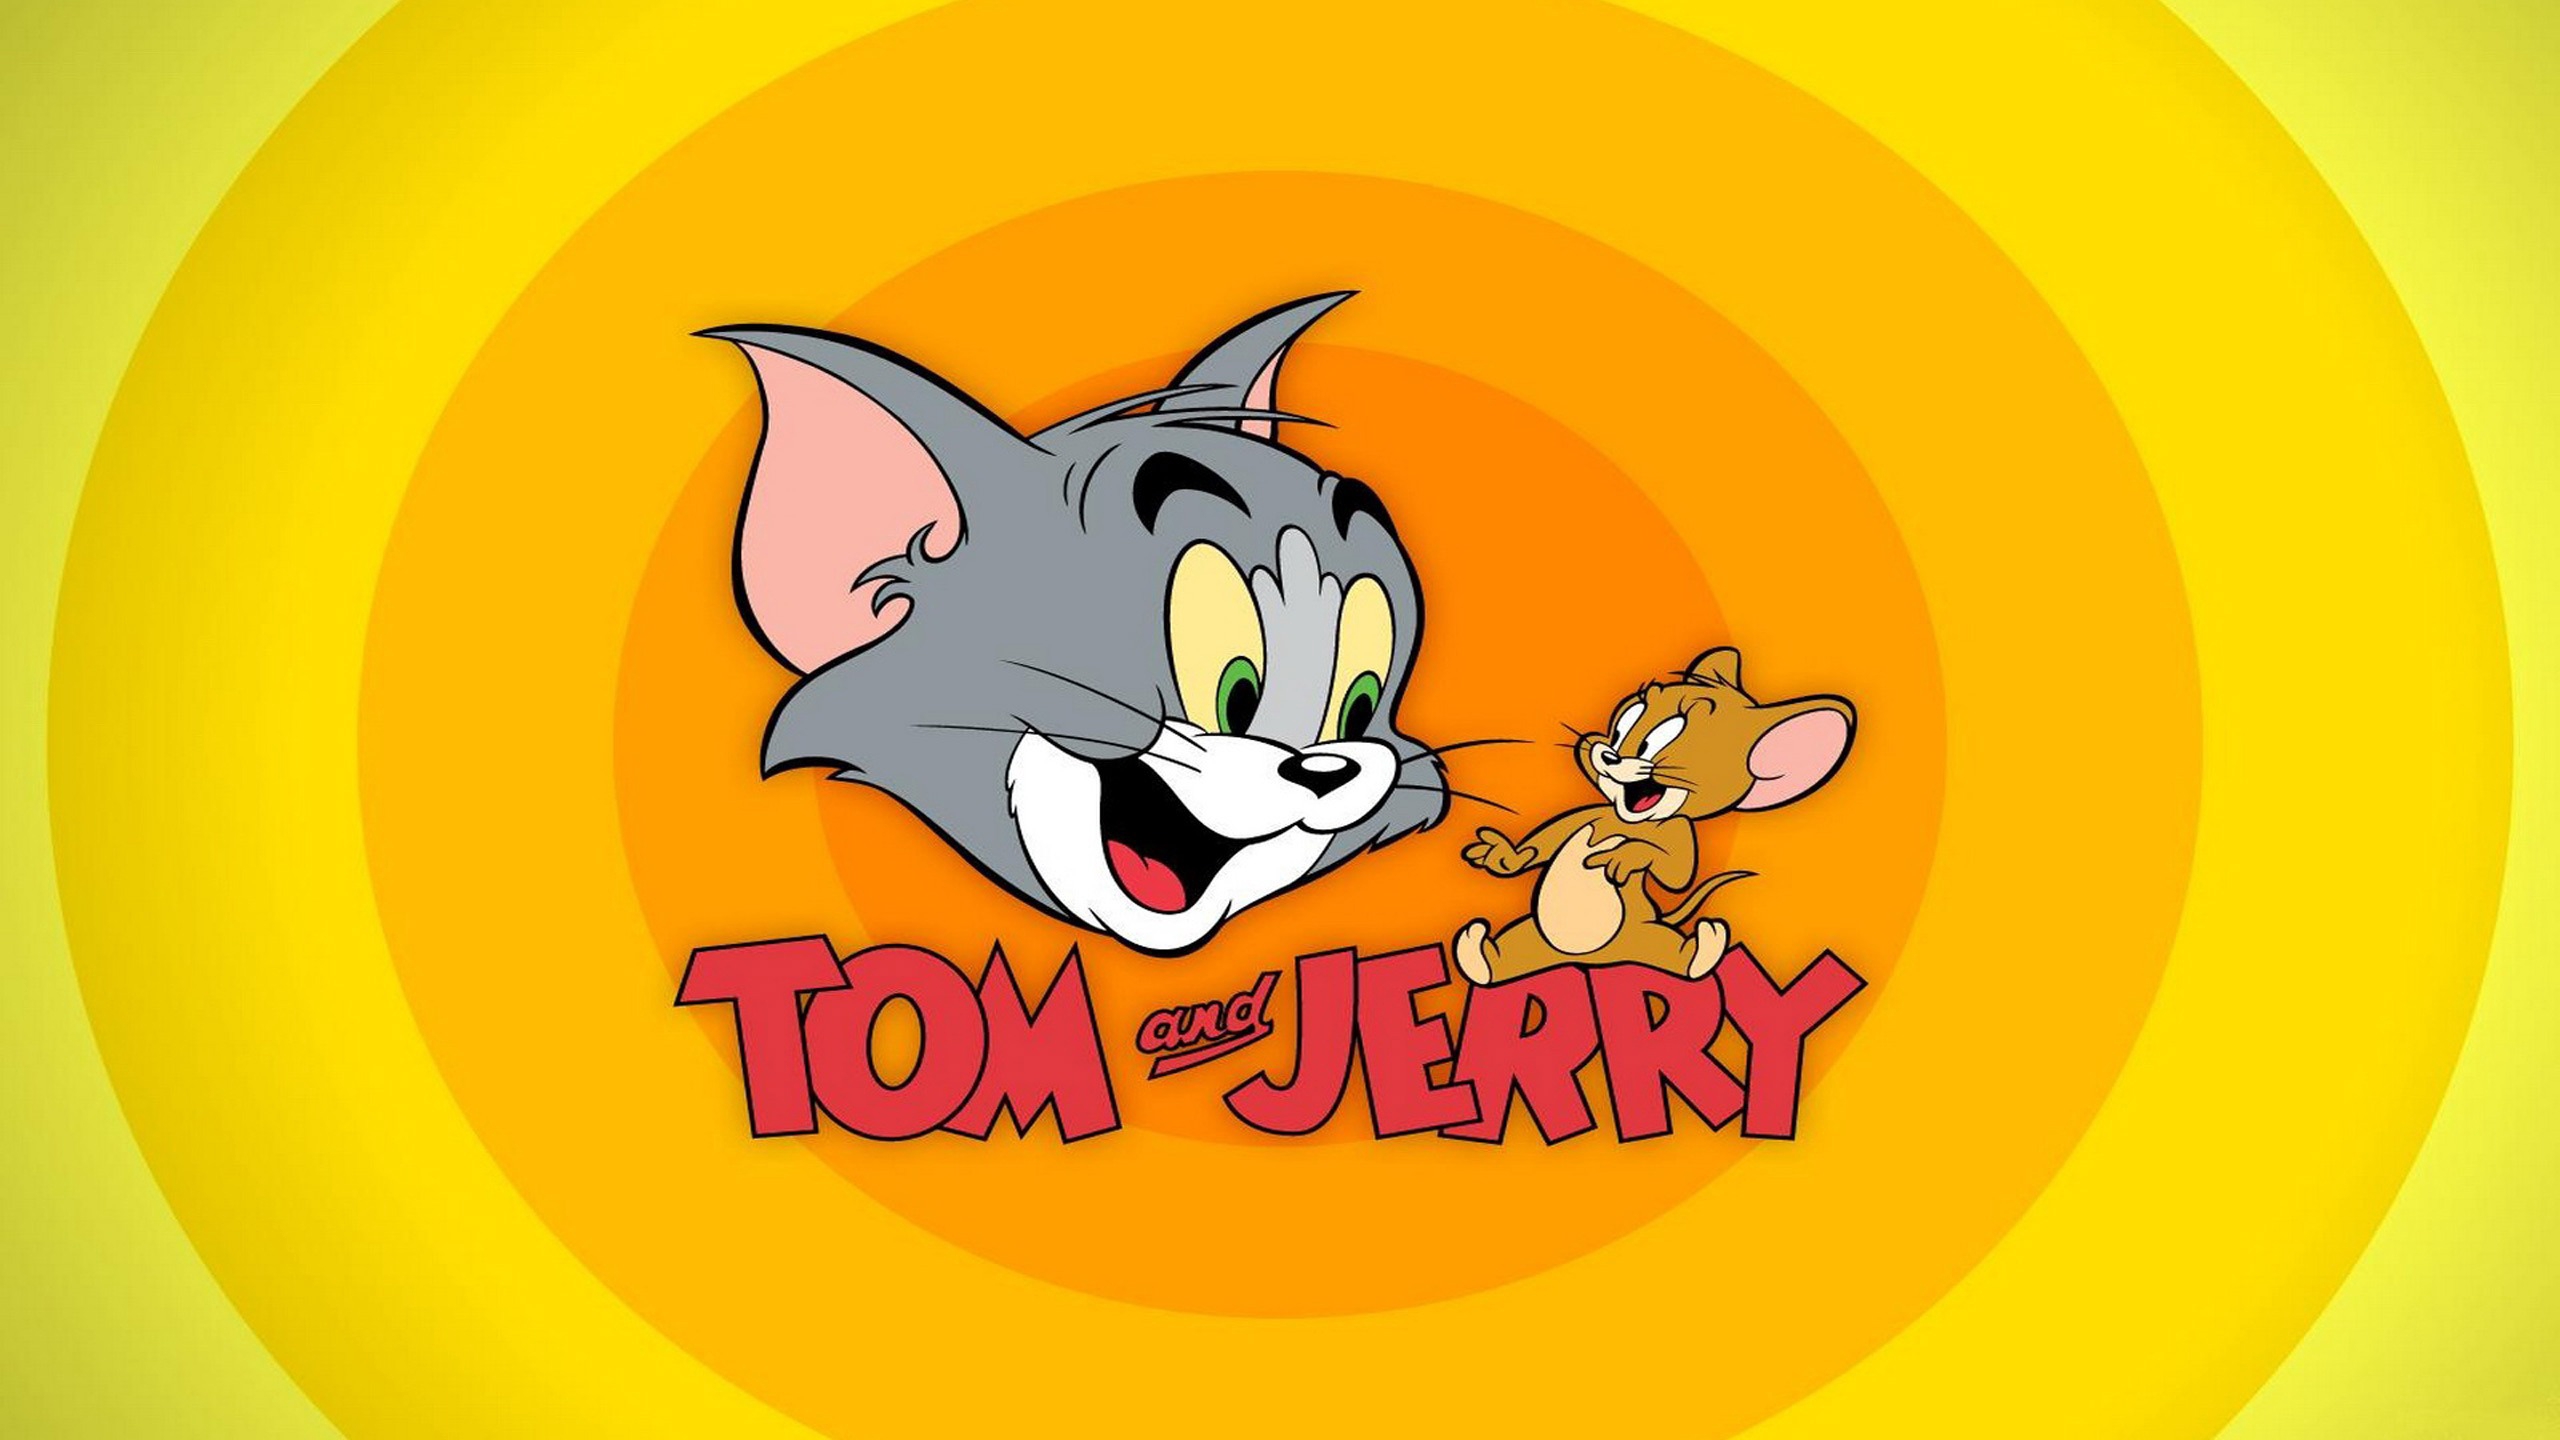 Jerry том и джерри. Tom and Jerry. Заставка мультфильма том и Джерри. Том и Джерри картинки.